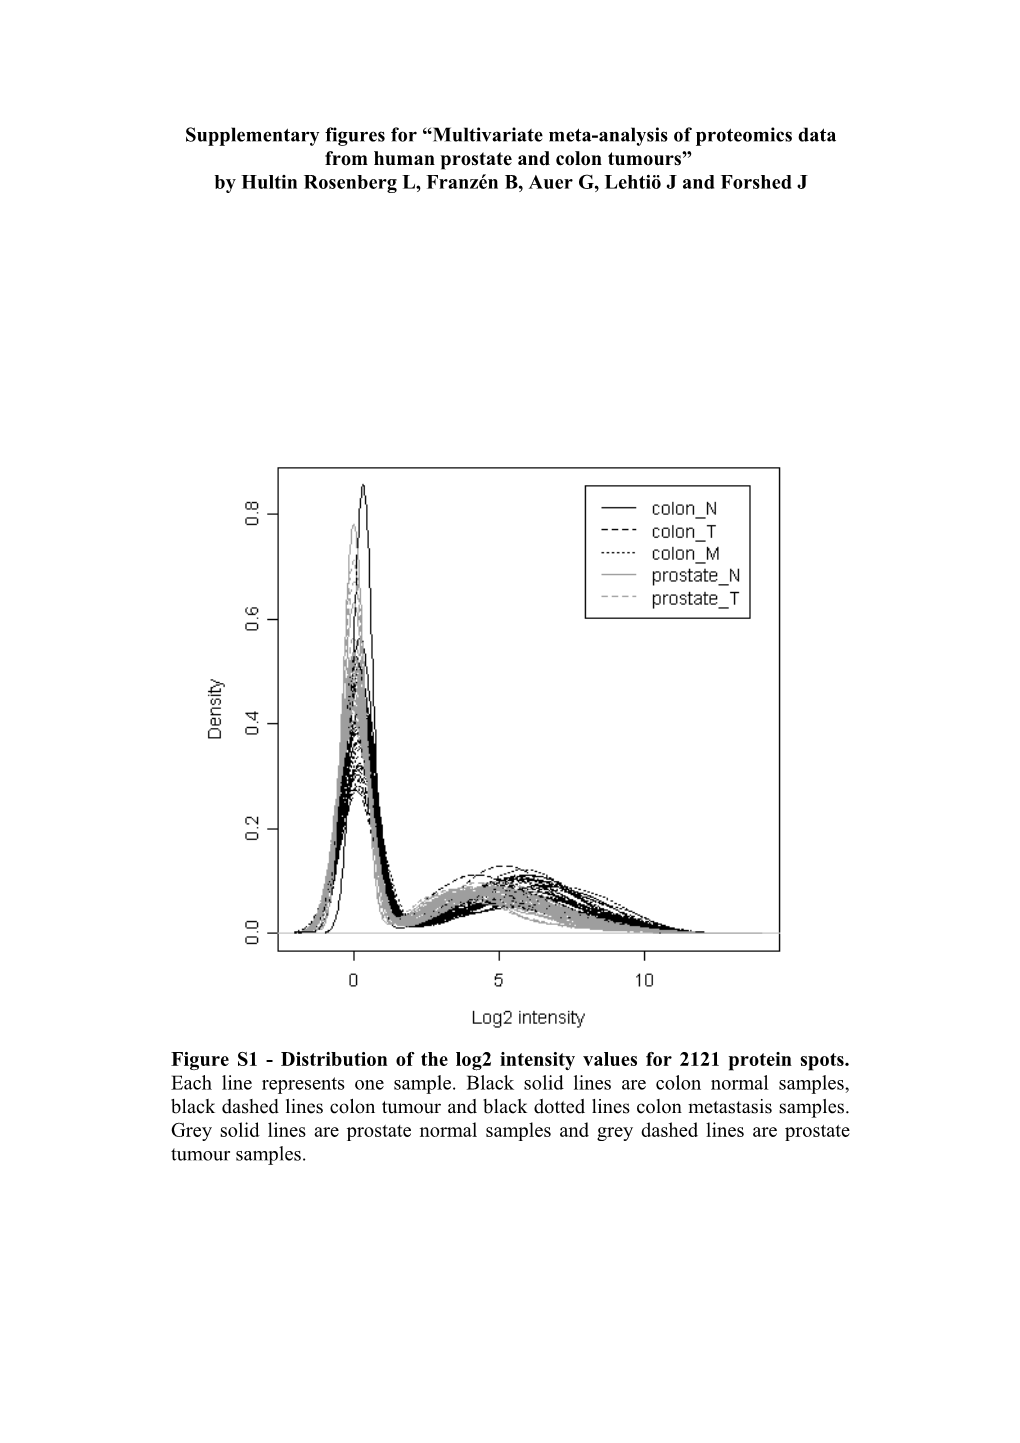 Supplementary Data for Multivariate Meta-Analysis of Proteomics Data from Human Prostate